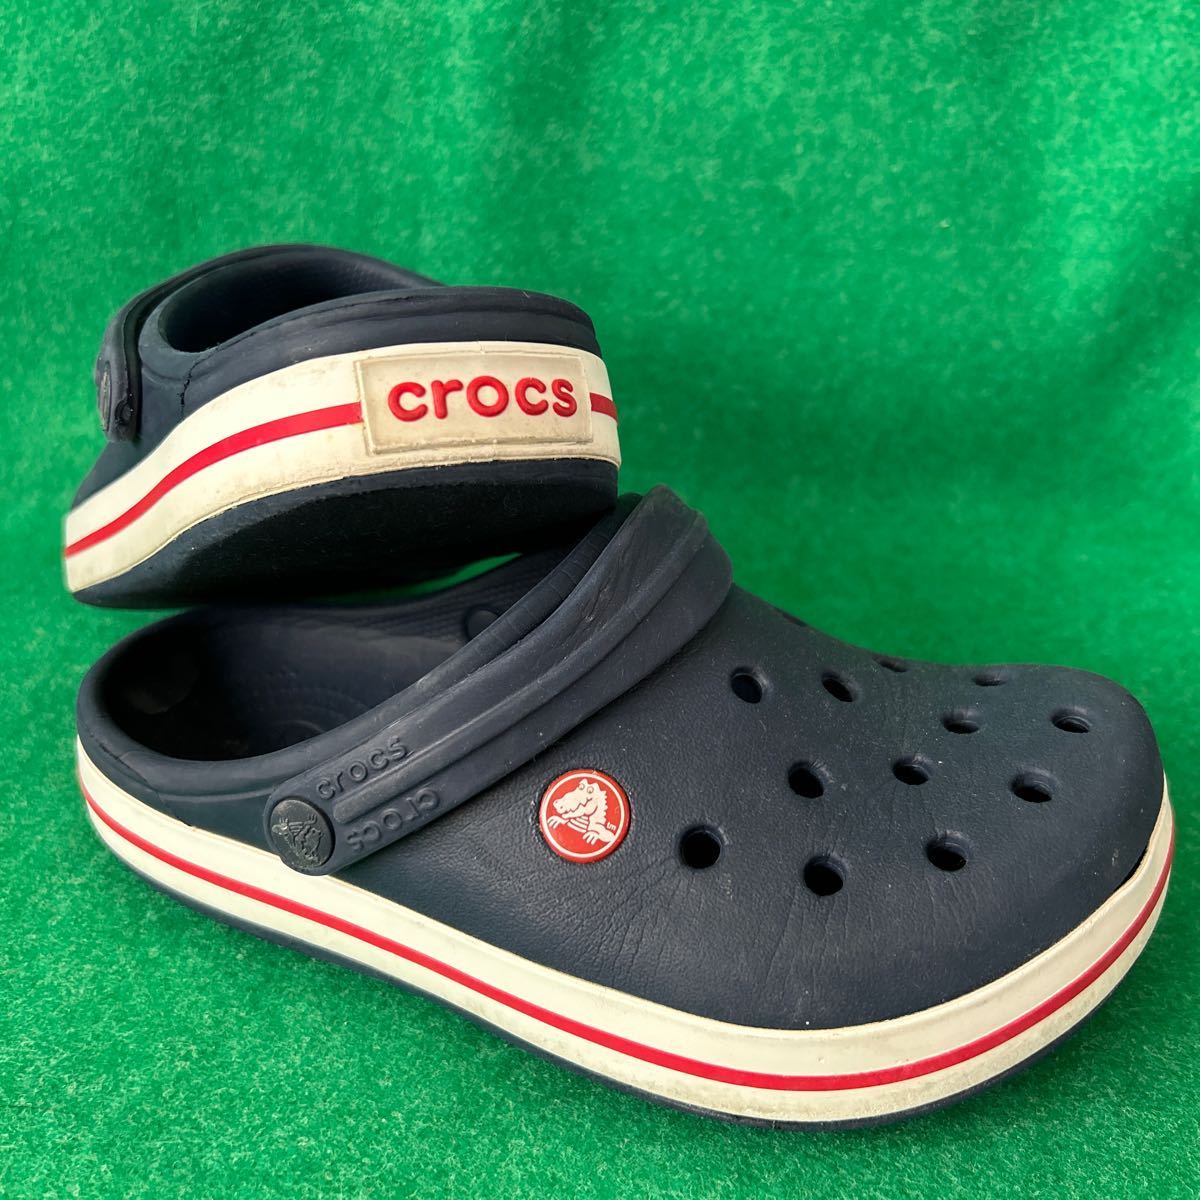  Crocs crocs clock band clog navy red 21.0cm corresponding J3 used